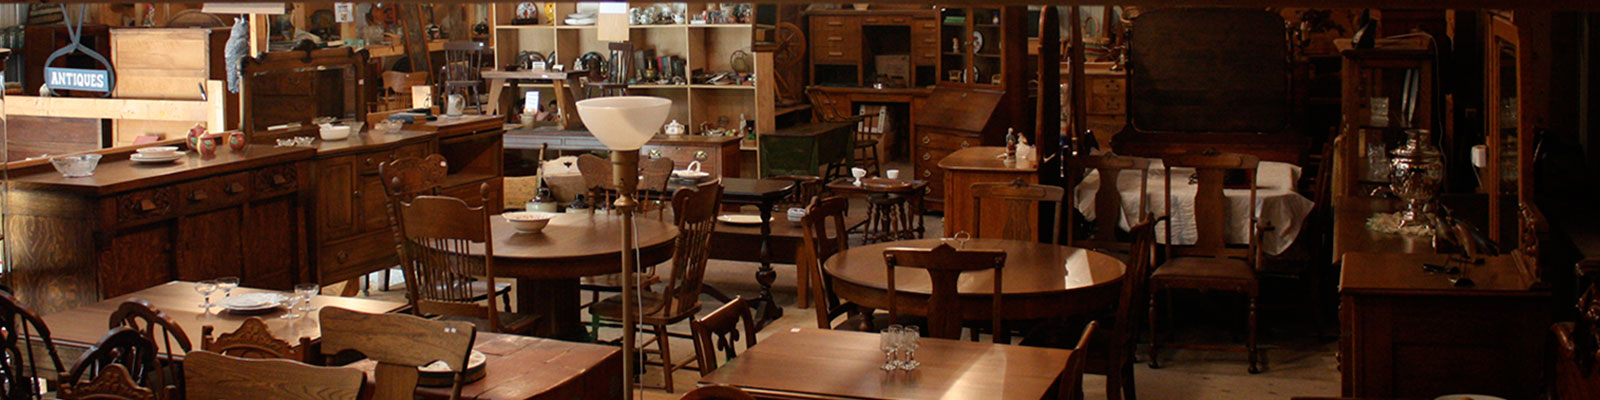 Delaquis Antiques Showroom - Antiques, Collectibles and Vintage Furniture